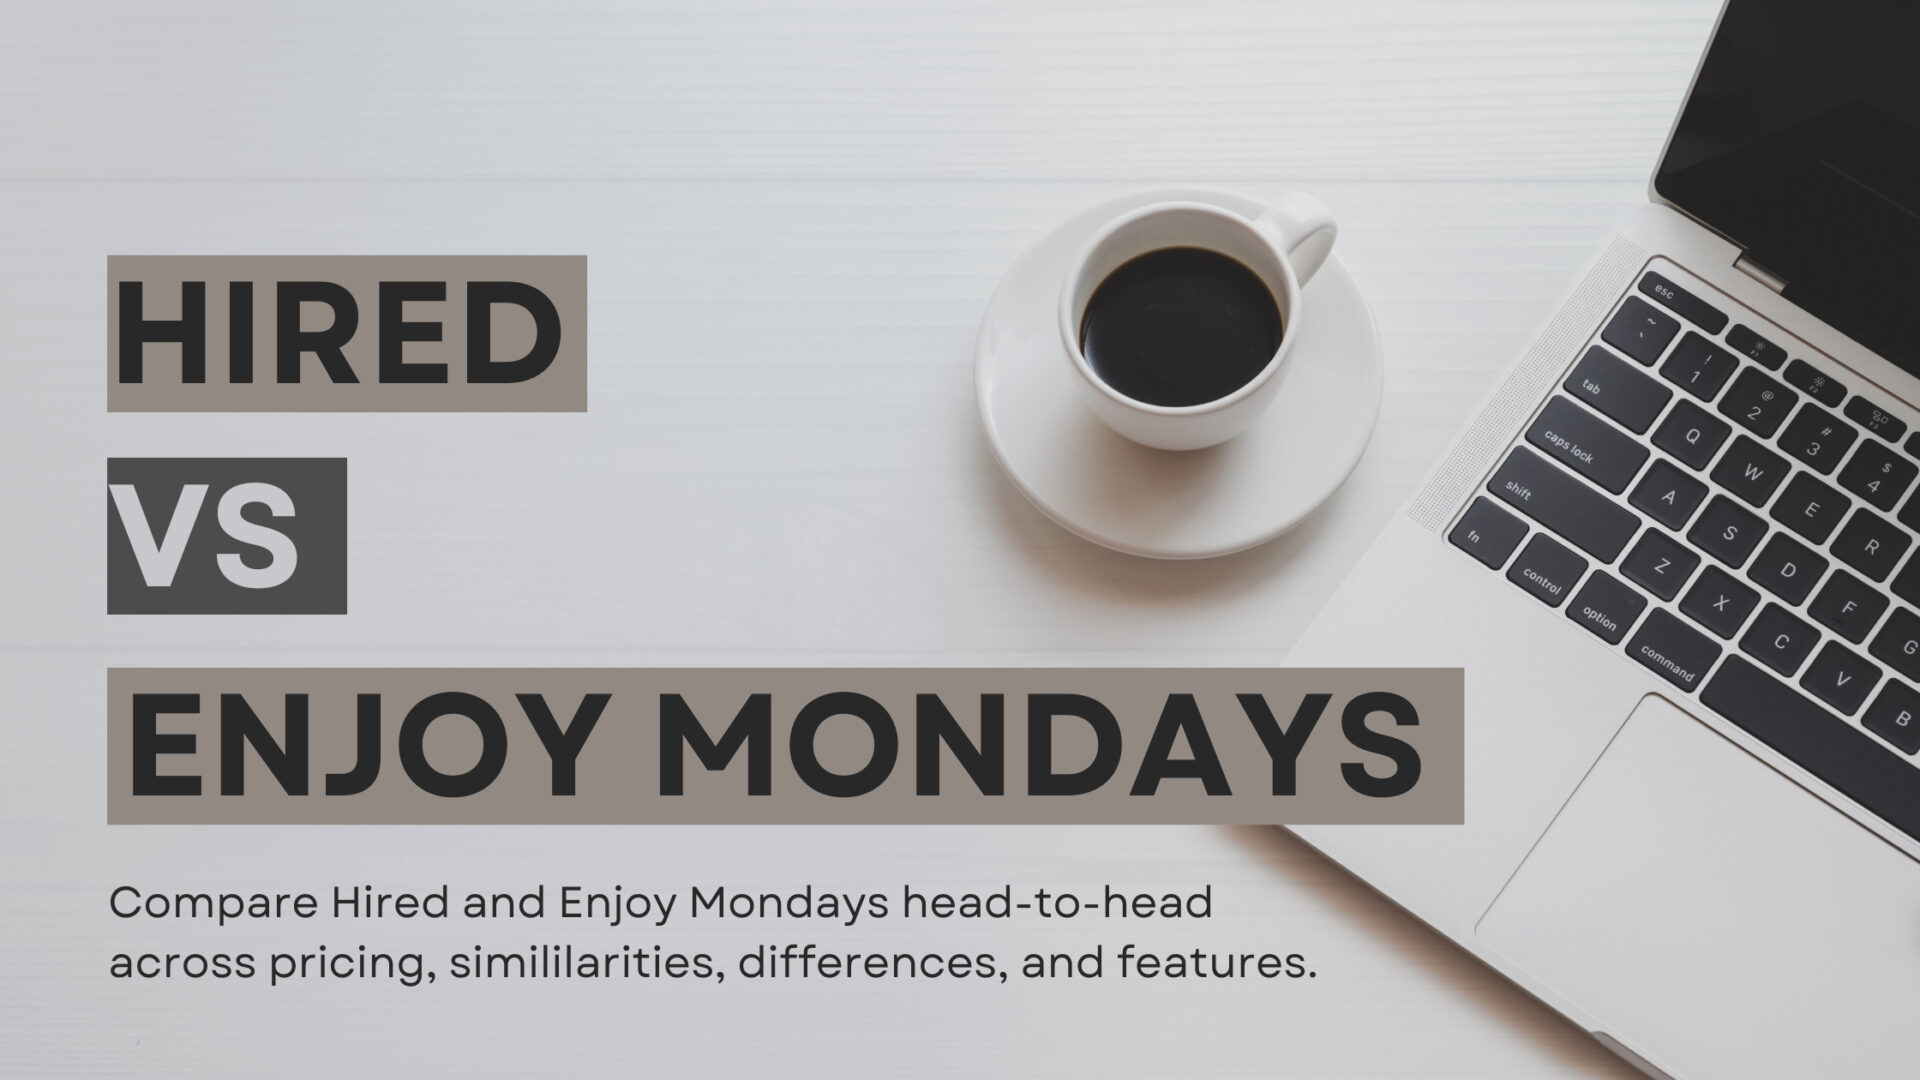 Compare Hired vs Enjoy Mondays